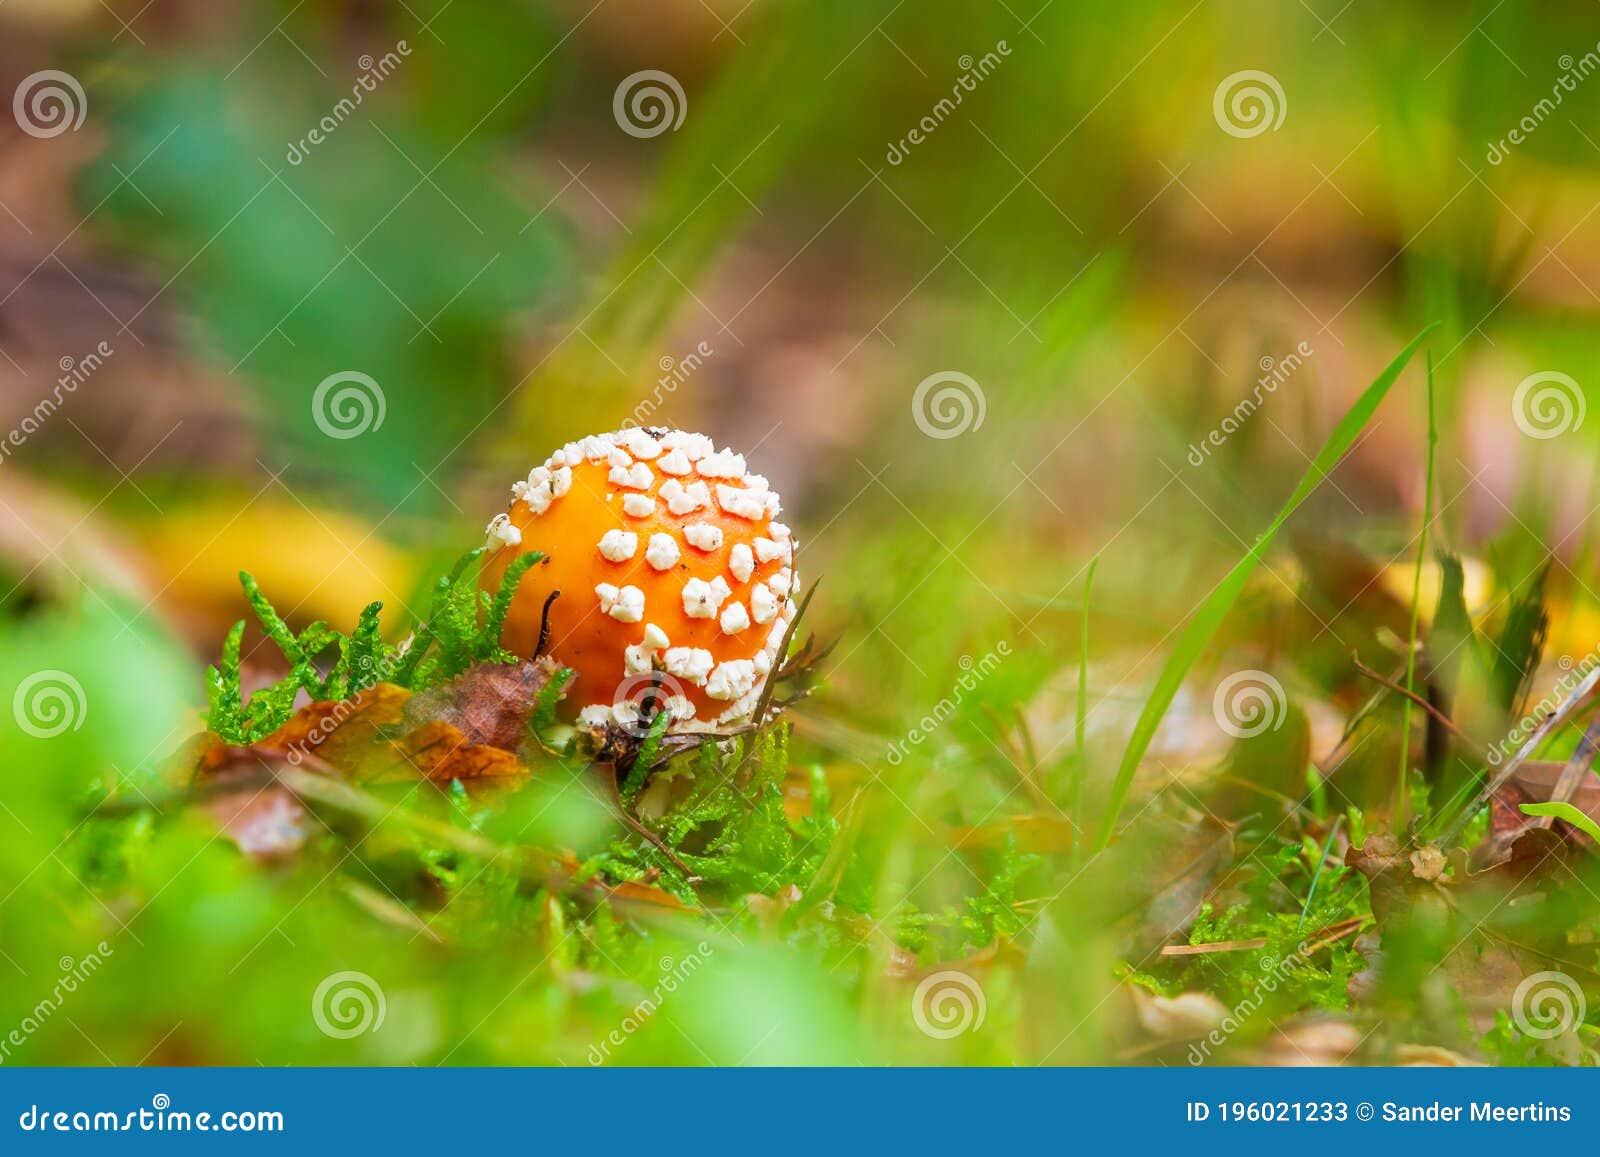 amanita muscaria, fly agaric or fly amanita basidiomycota muscimol mushroom